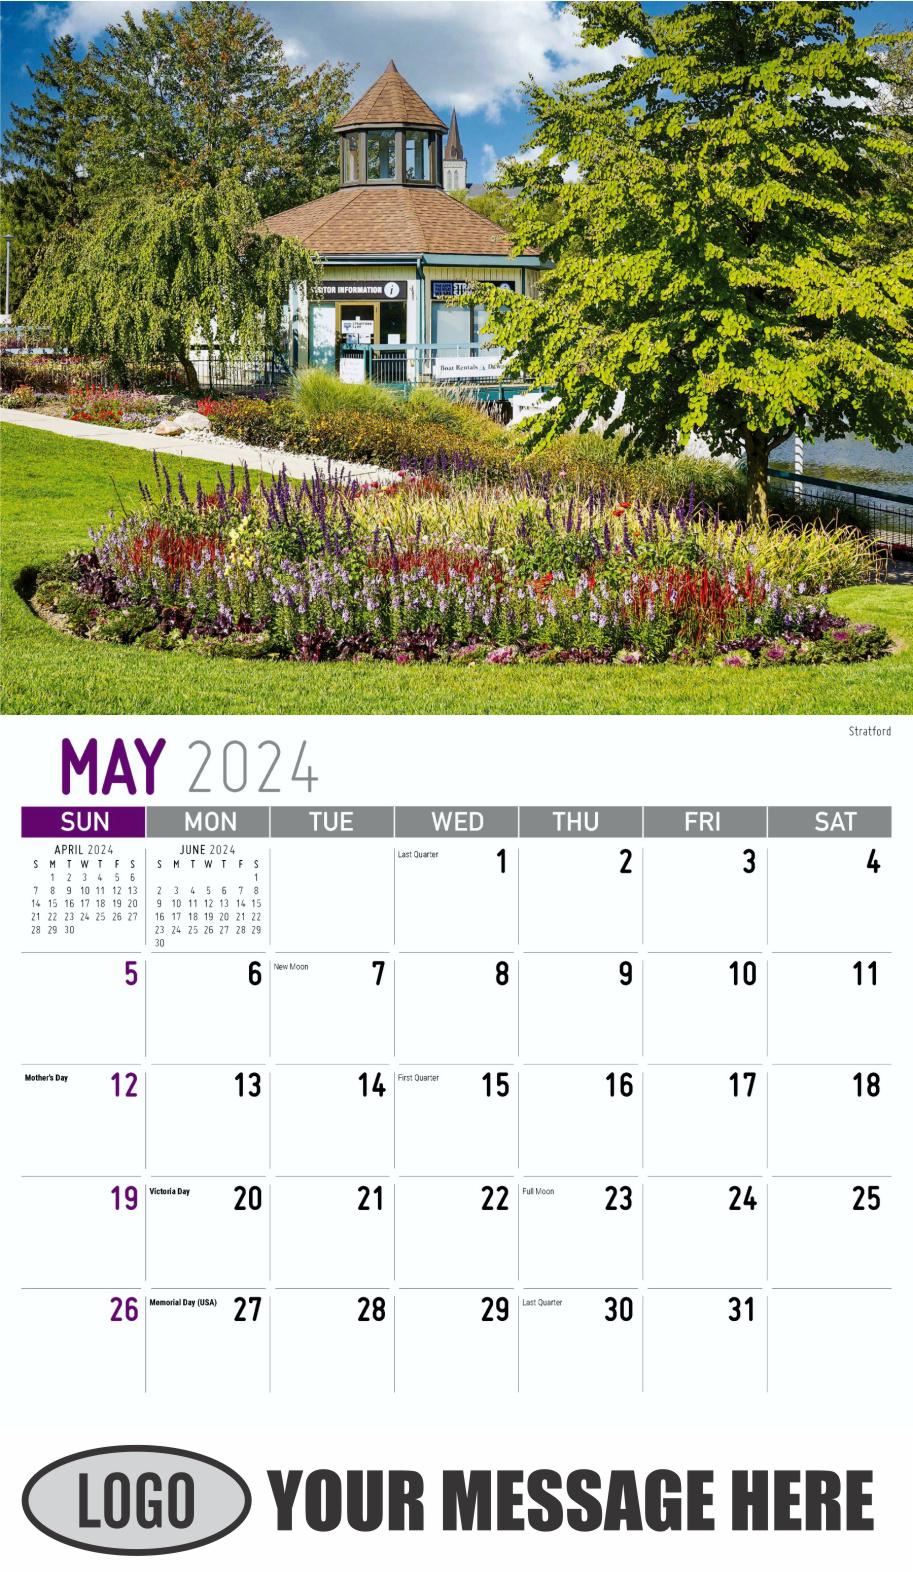 Scenes of Ontario 2024 Business Promo Wall Calendar - May